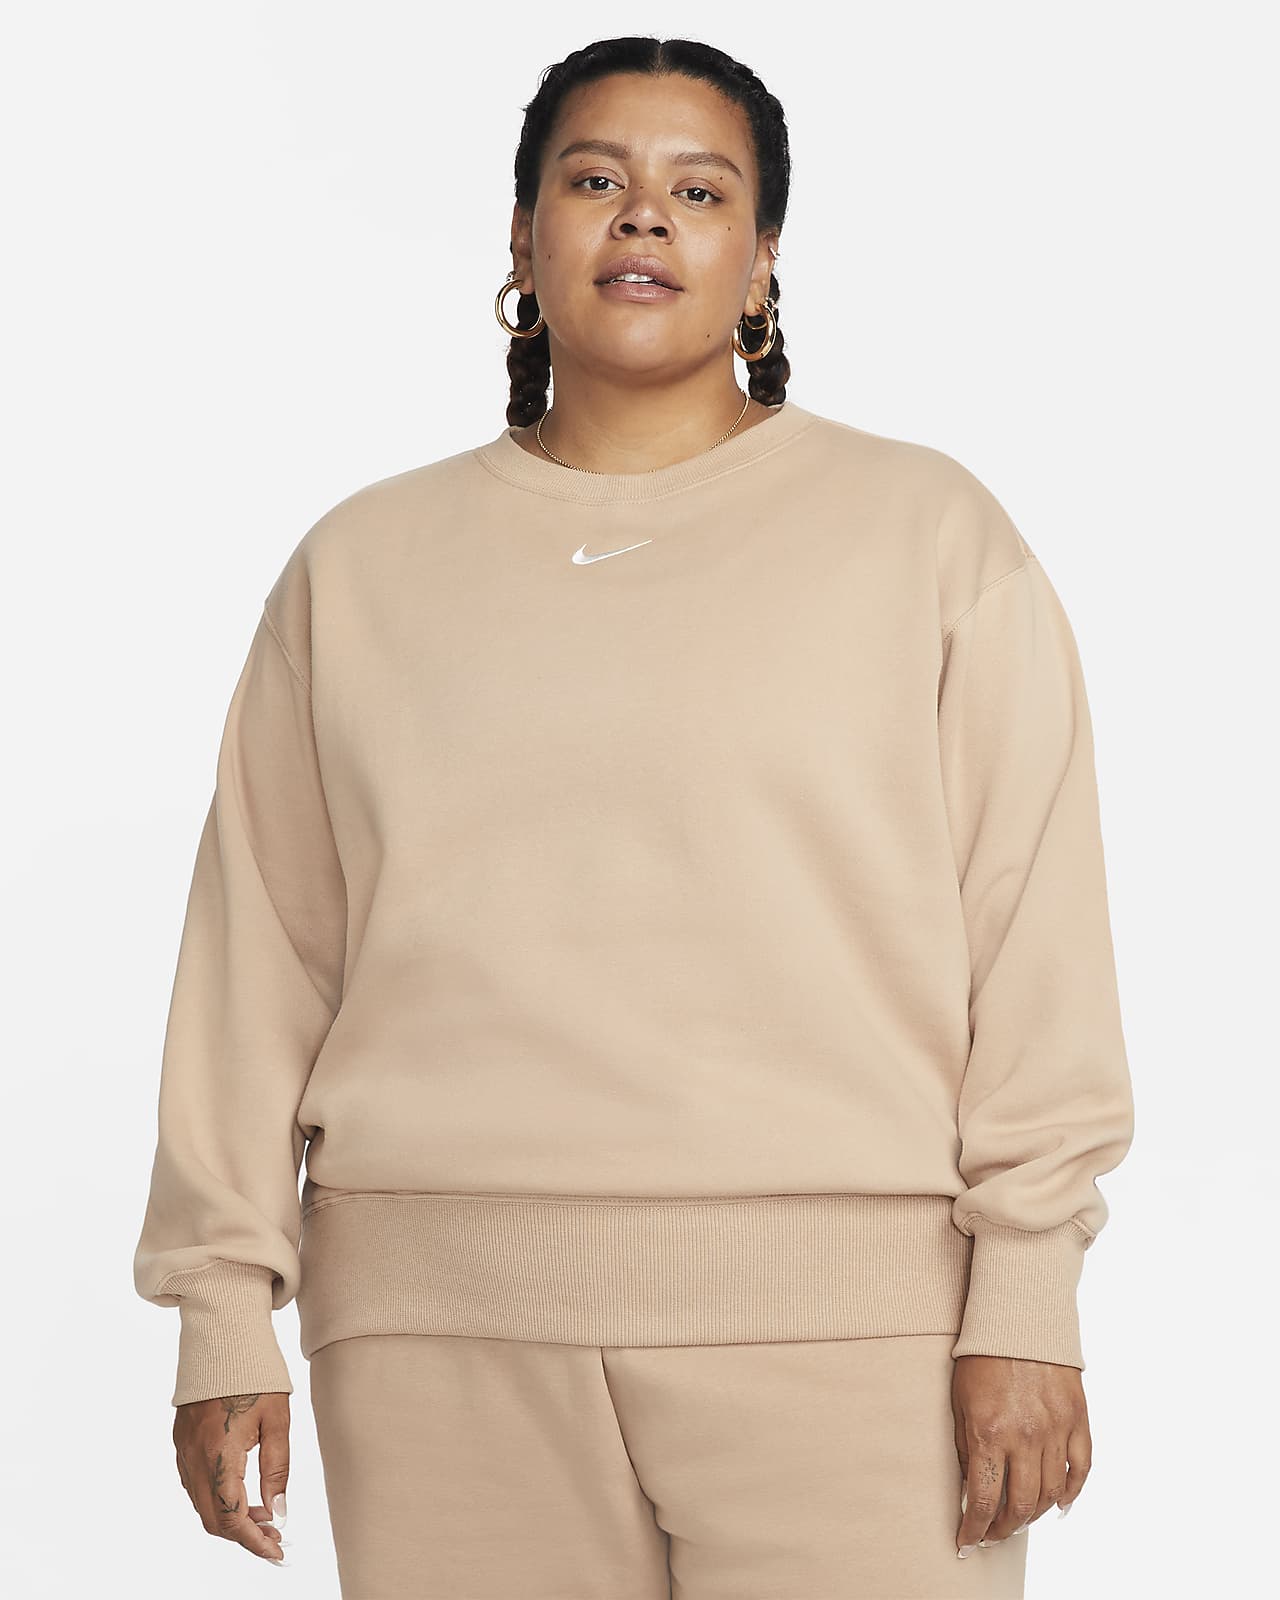 Nike Sportswear Phoenix Fleece Dessuadora oversized de coll rodó (talles grans) - Dona